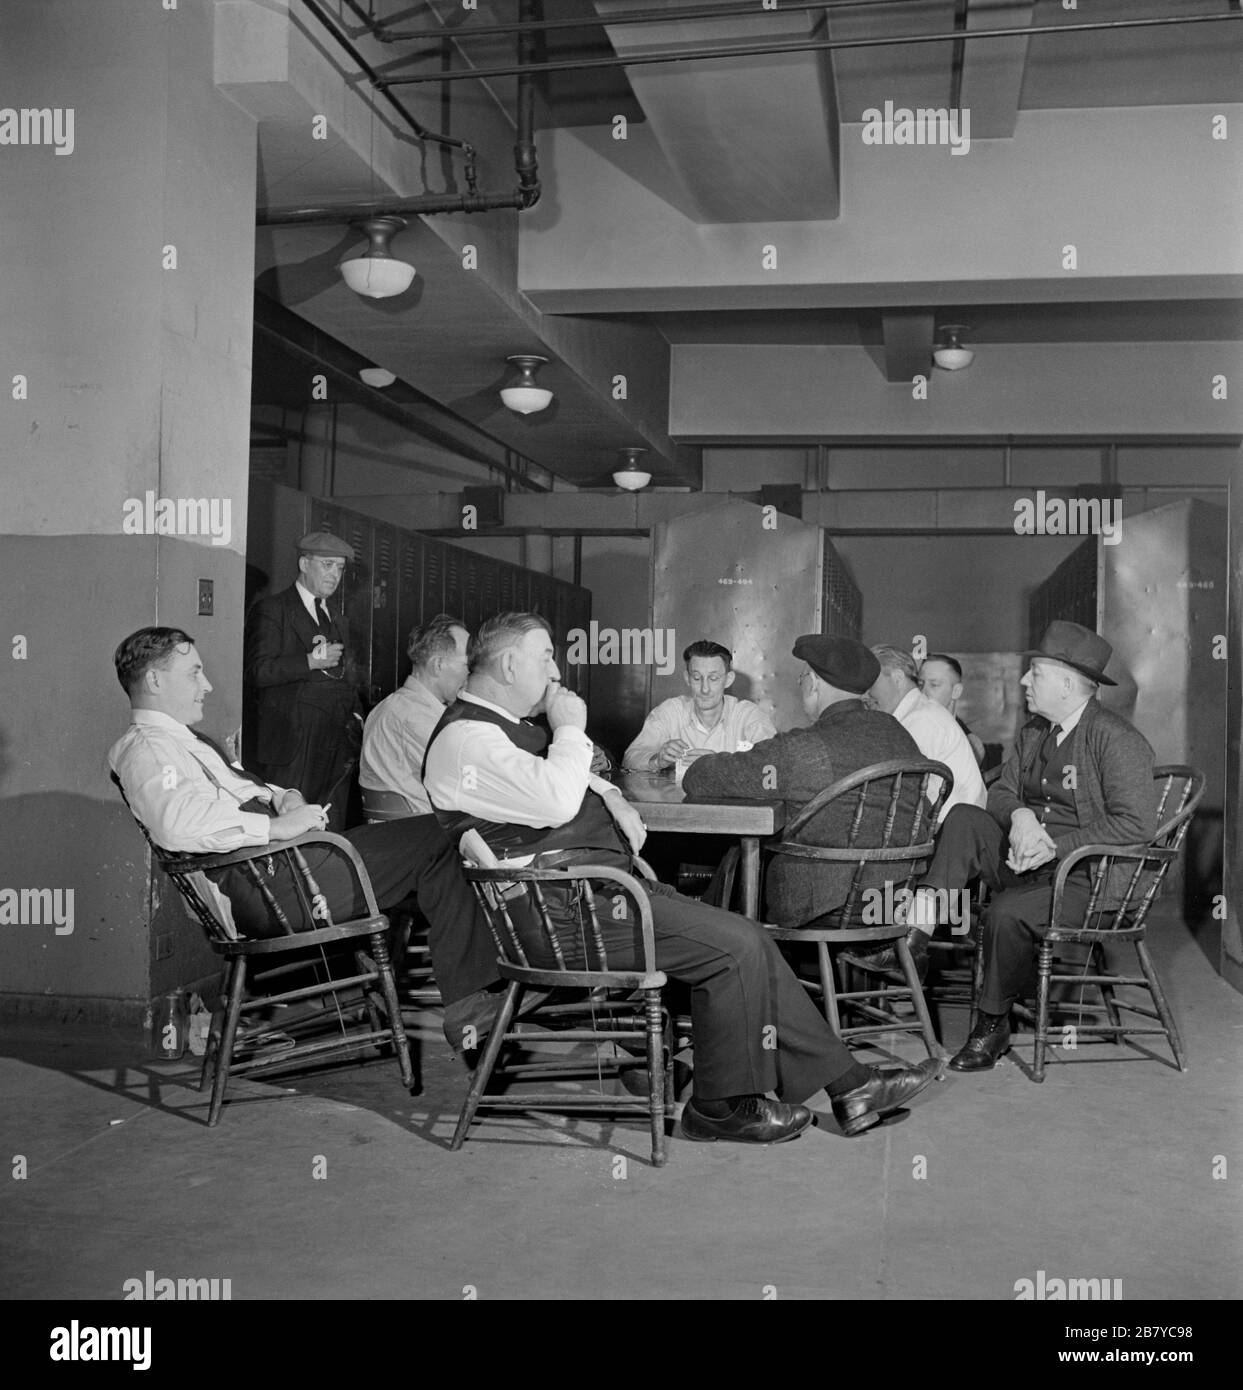 Brakemen relax in Locker Room, Union Station, Chicago, Illinois, USA, Jack Delano, U.S. Office of War Information, gennaio 1943 Foto Stock